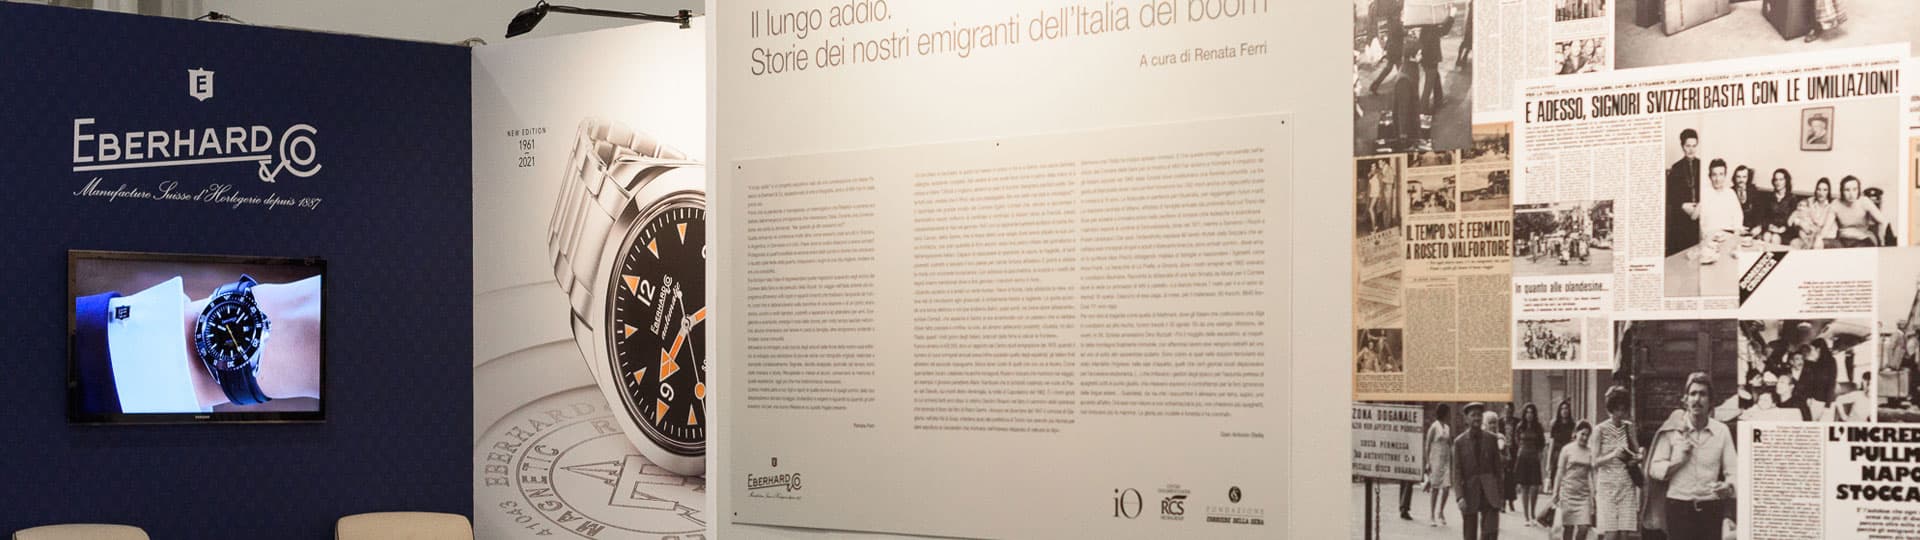 MIA – Milan Image Art Fair